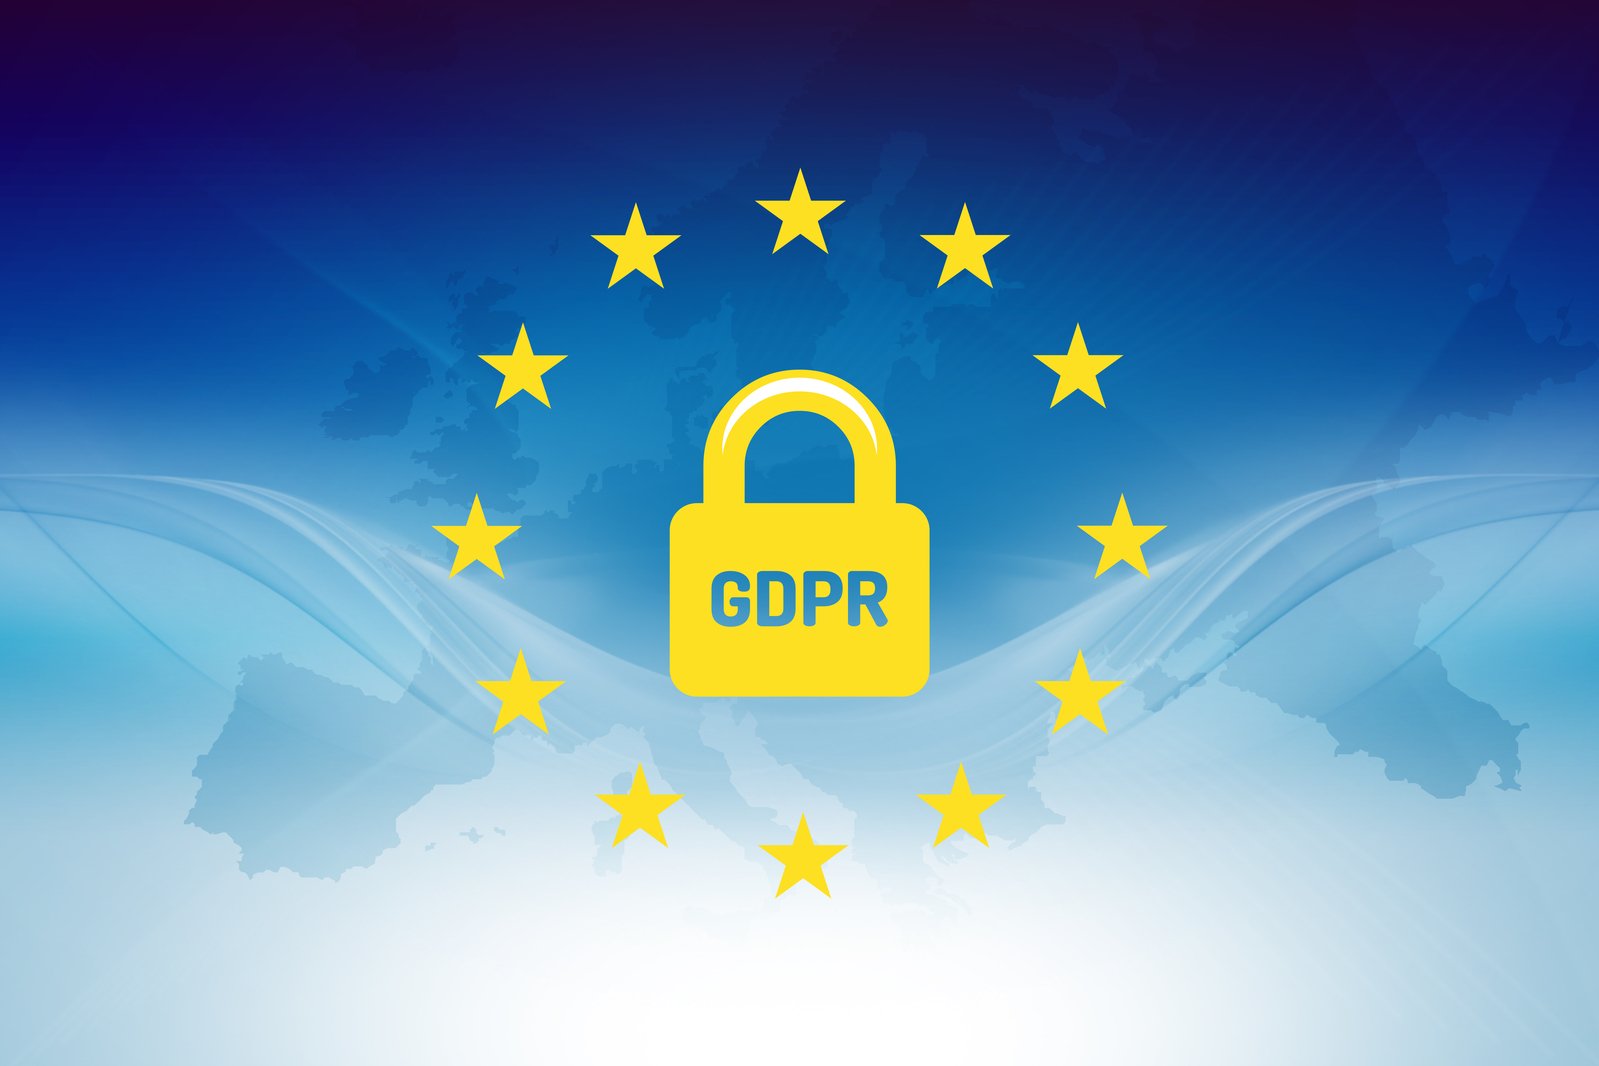 GDPR logo and EU stars on blue/white background.